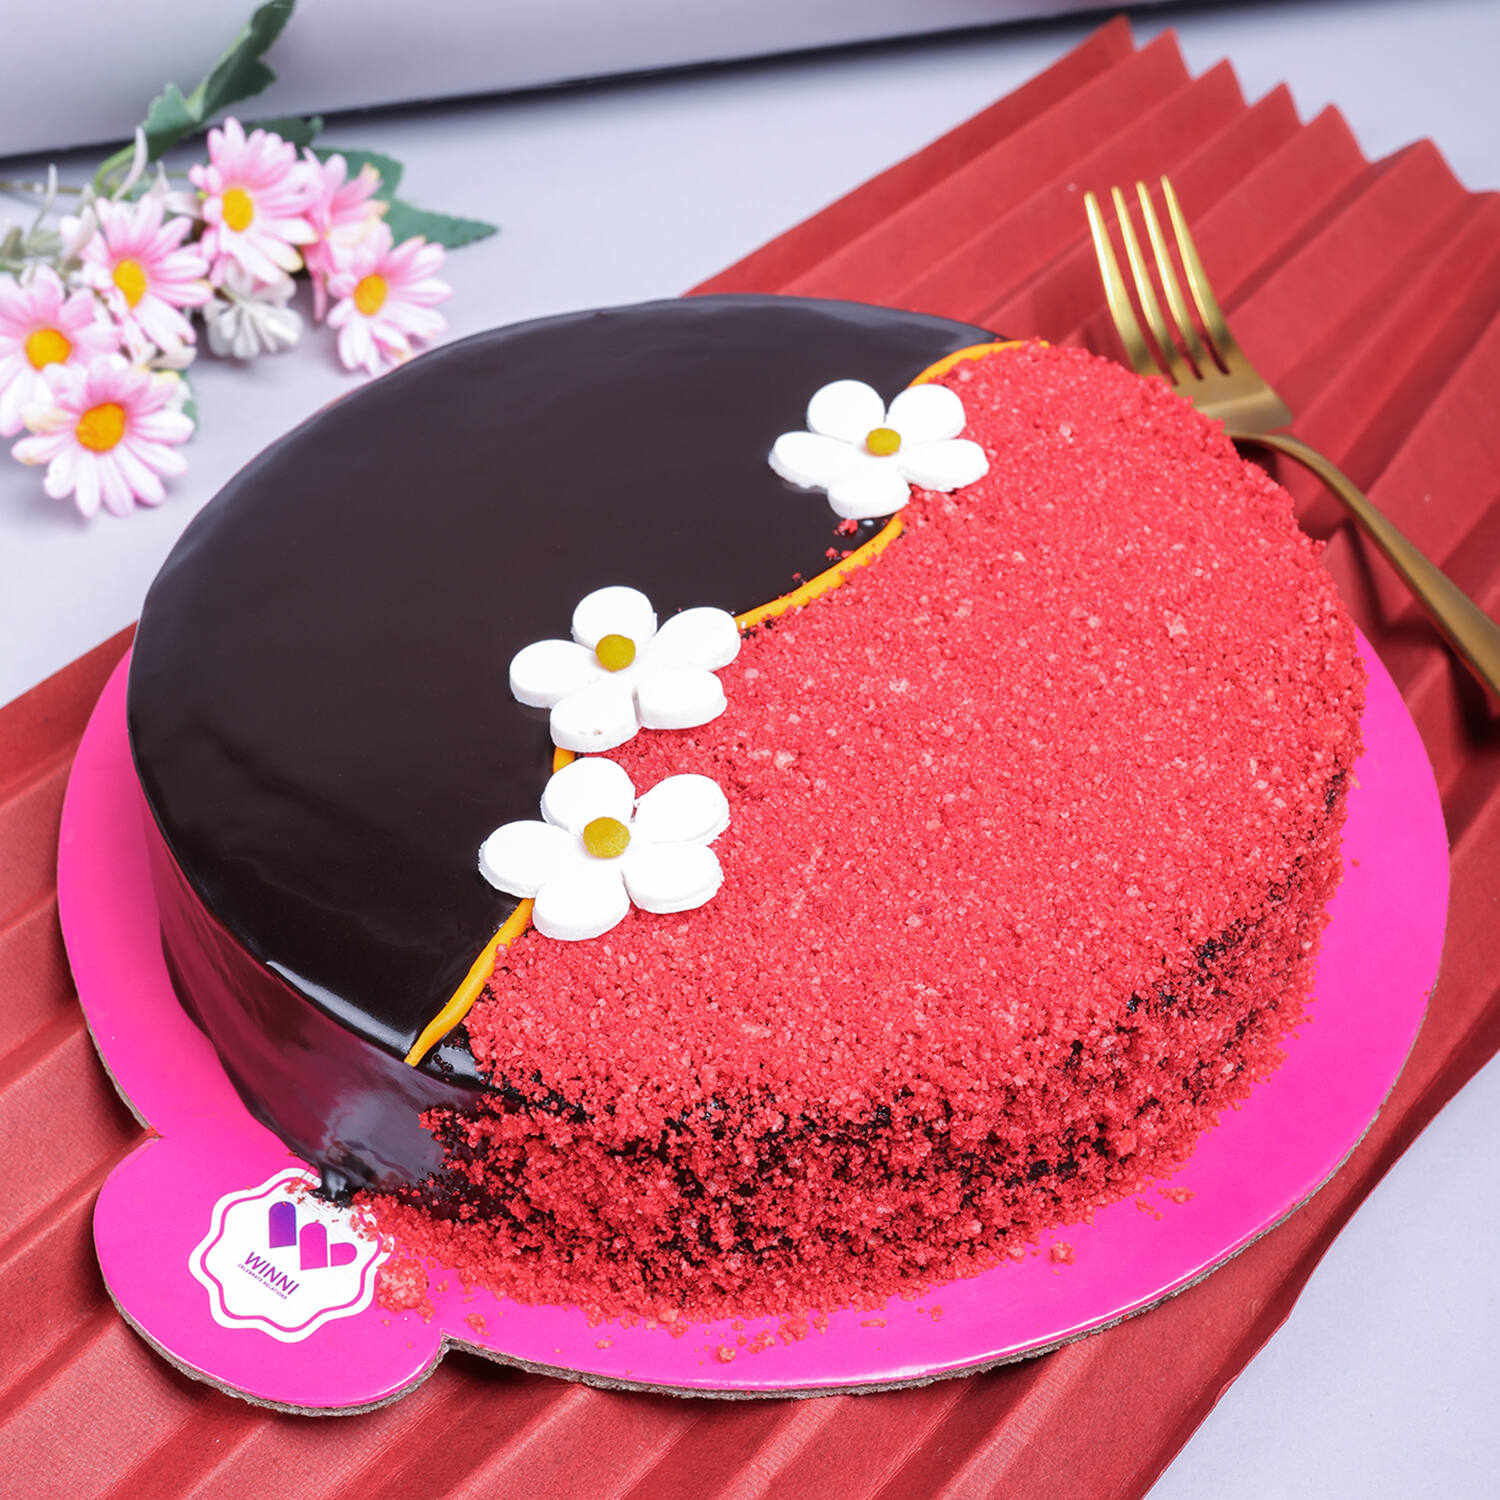 Shop for Fresh Vintage Birthday Cake online - Hyderabad